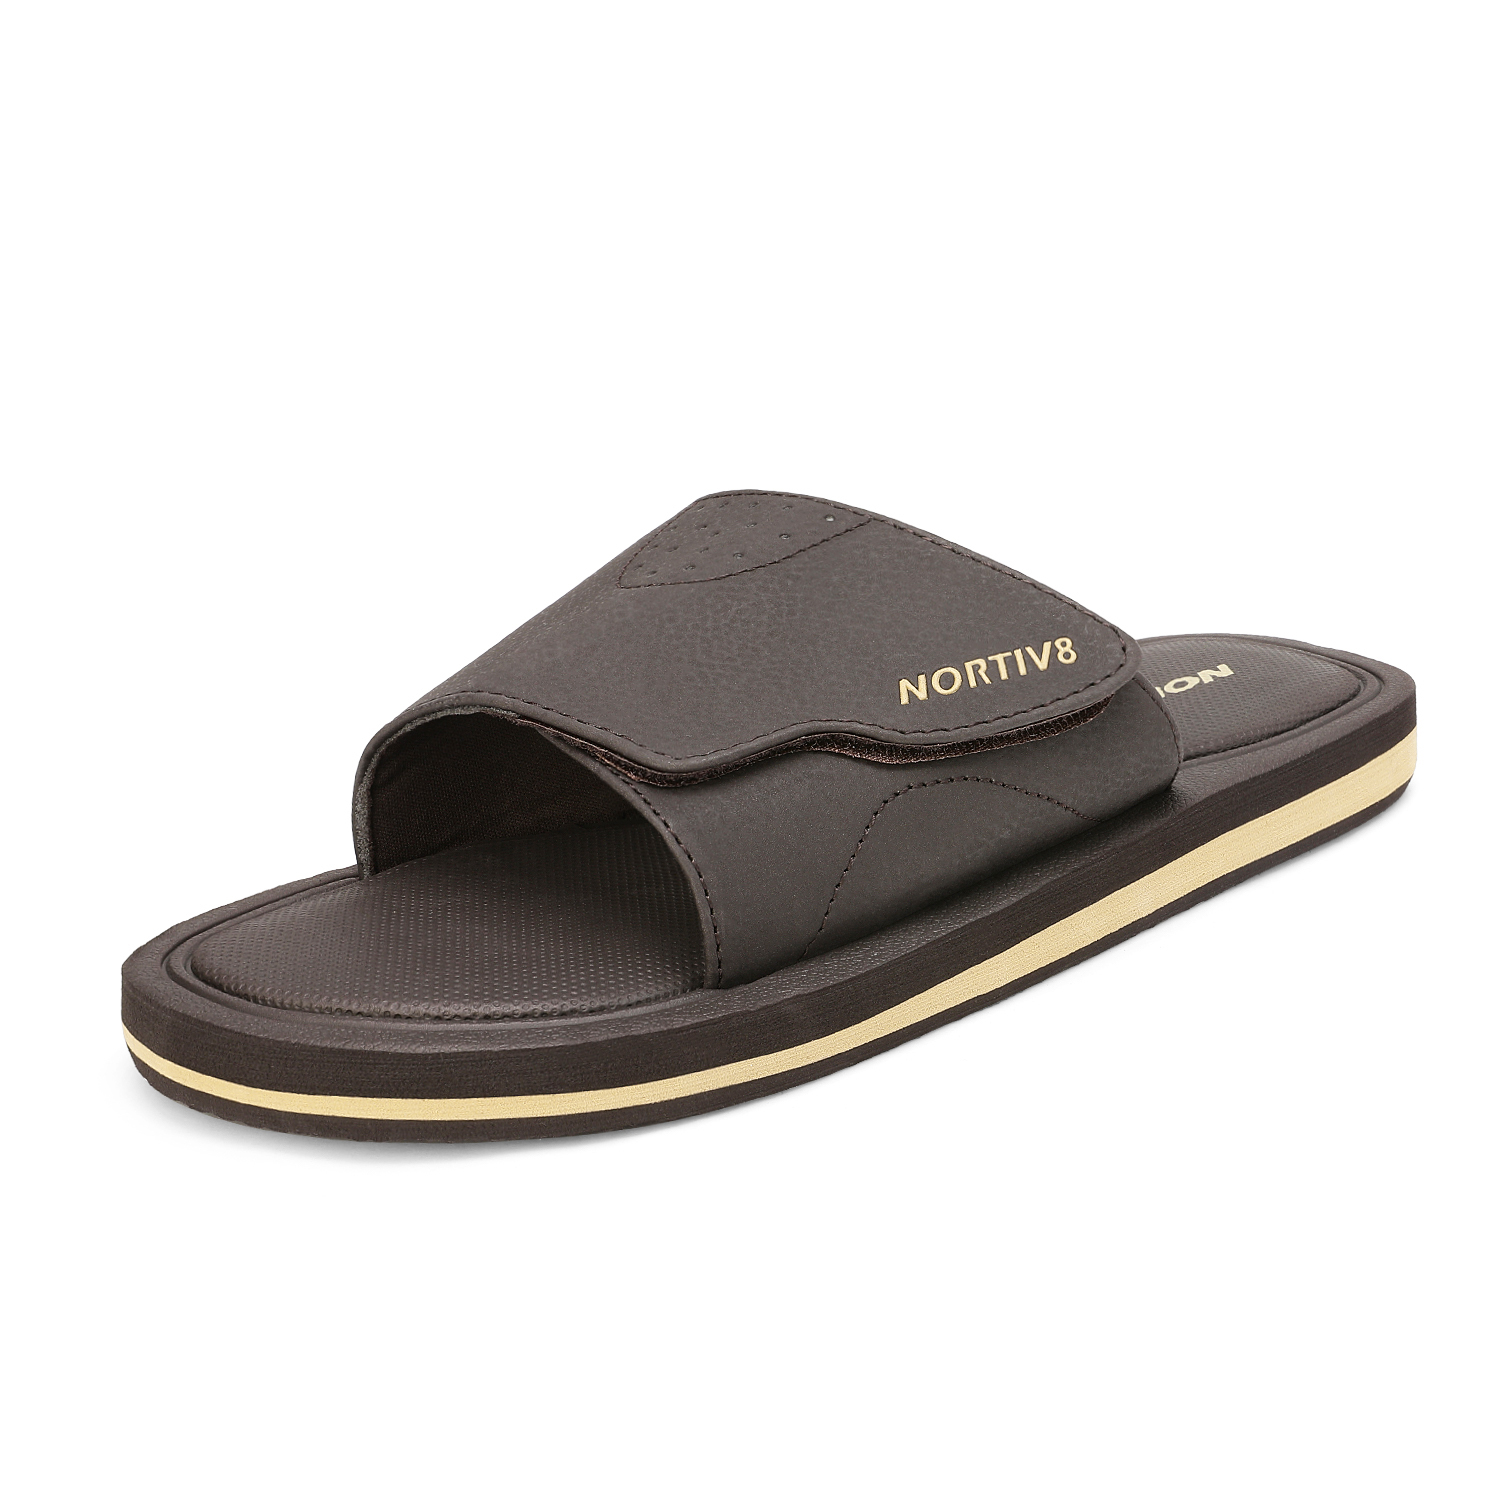 Nortiv 8 Men's Memory Foam Adjustable Slide Sandals Comfort Lightweight Beach Shoes Summer Outdoor Slipper Fusion Dark/Brown Size 8 - image 1 of 5